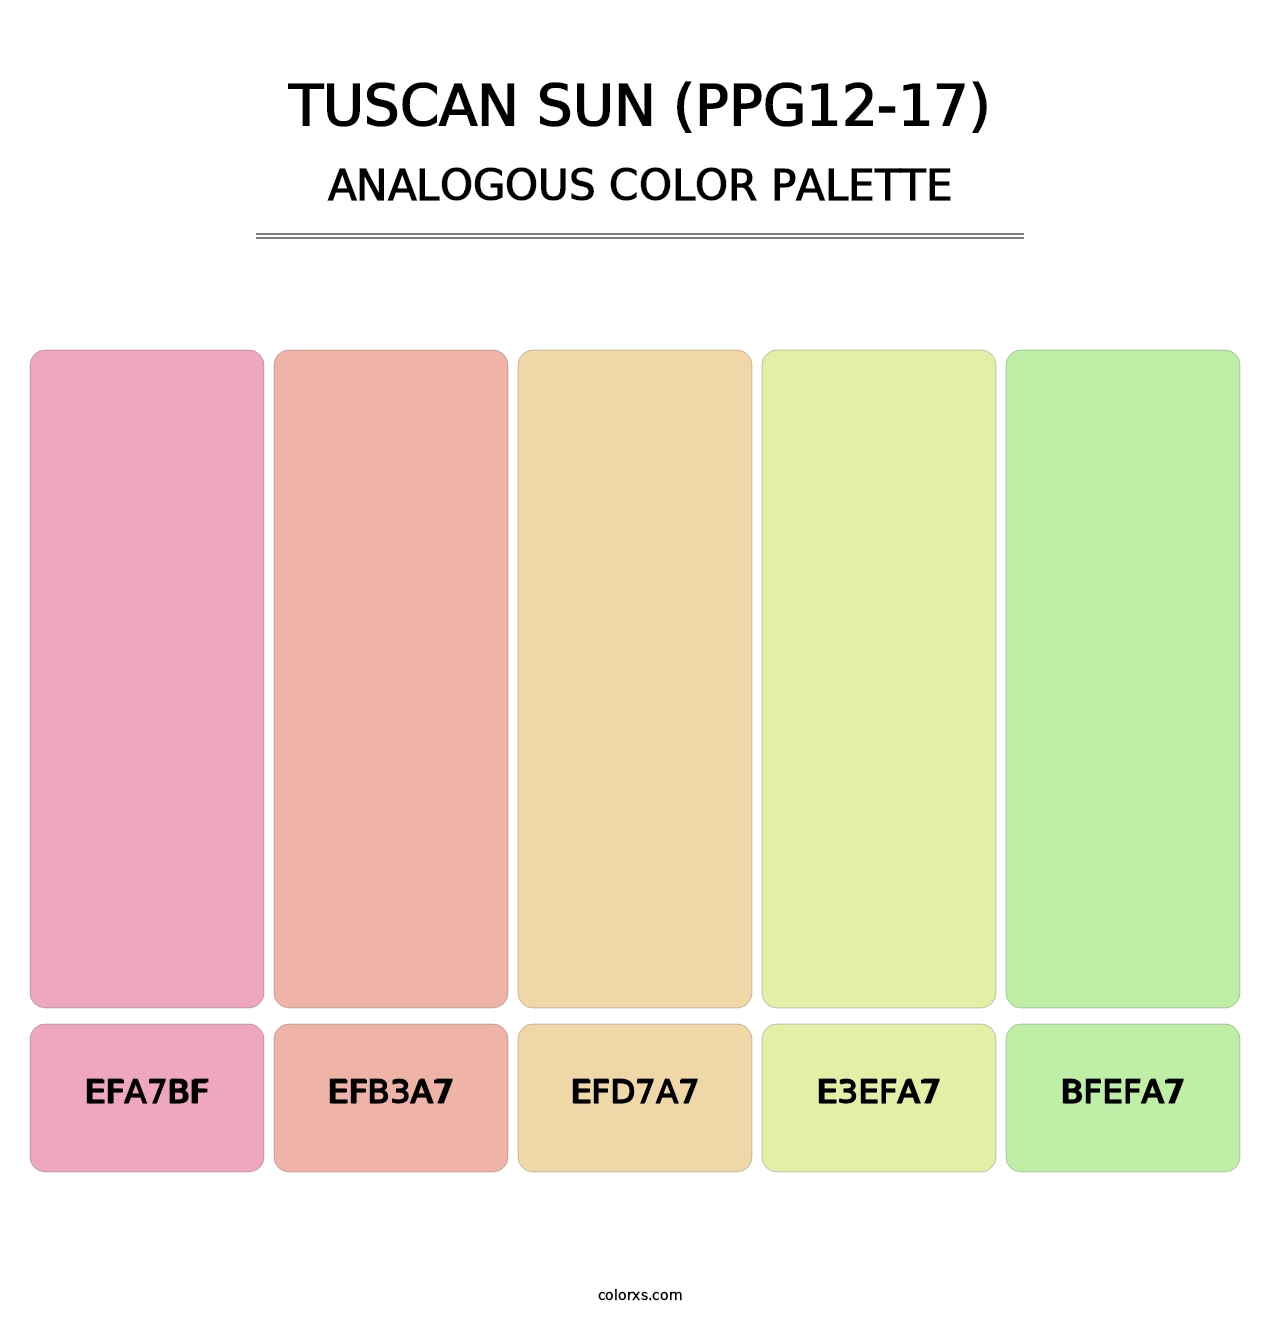 Tuscan Sun (PPG12-17) - Analogous Color Palette